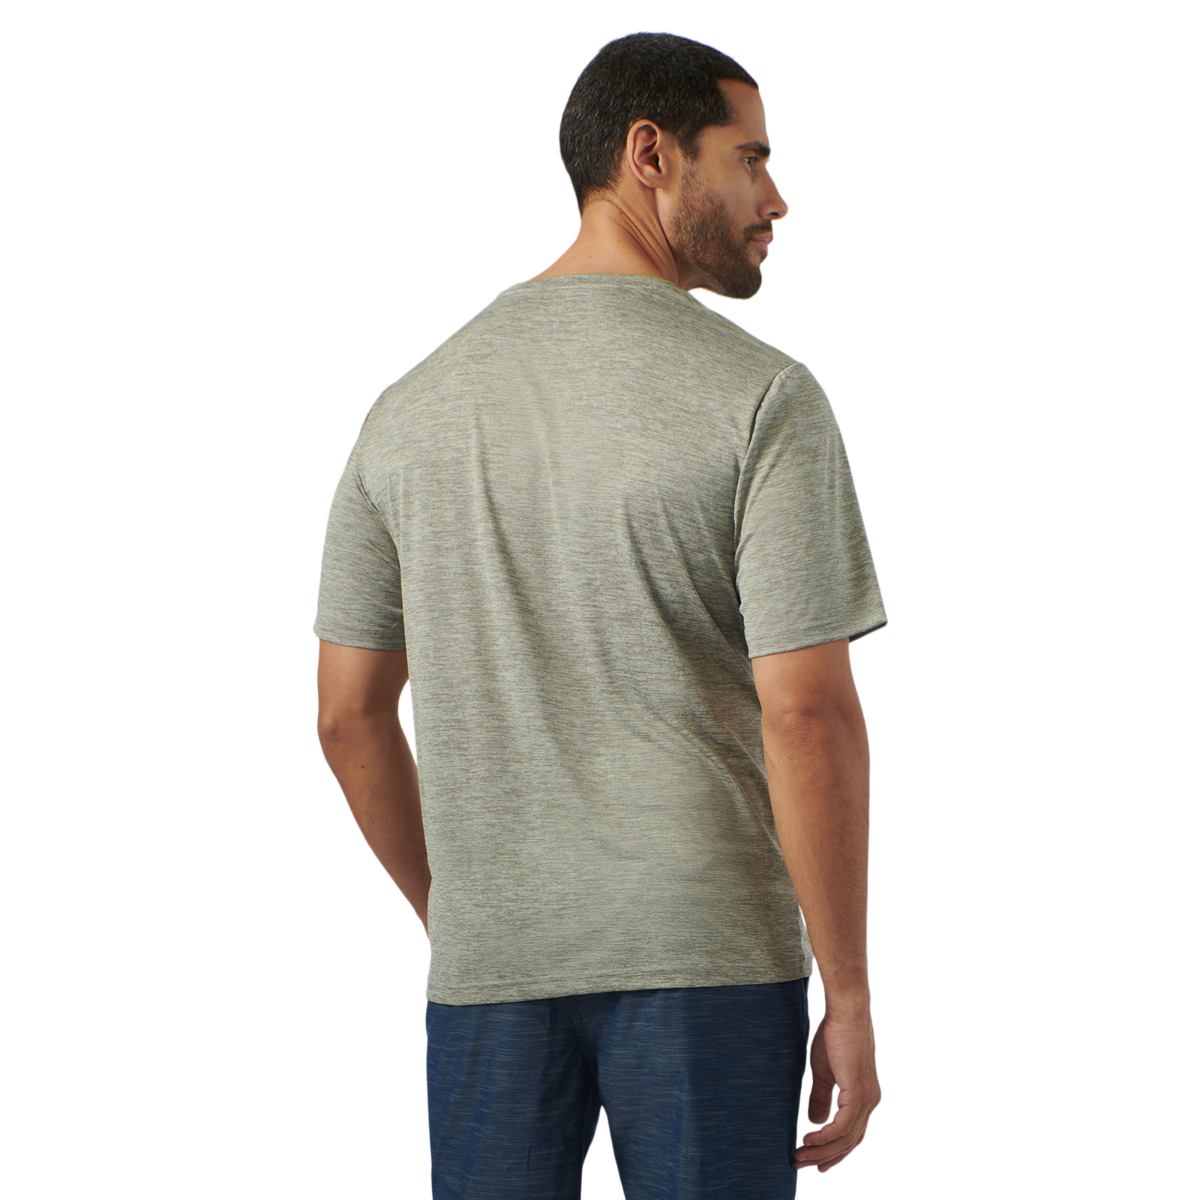 Men's UV Protection T-Shirt